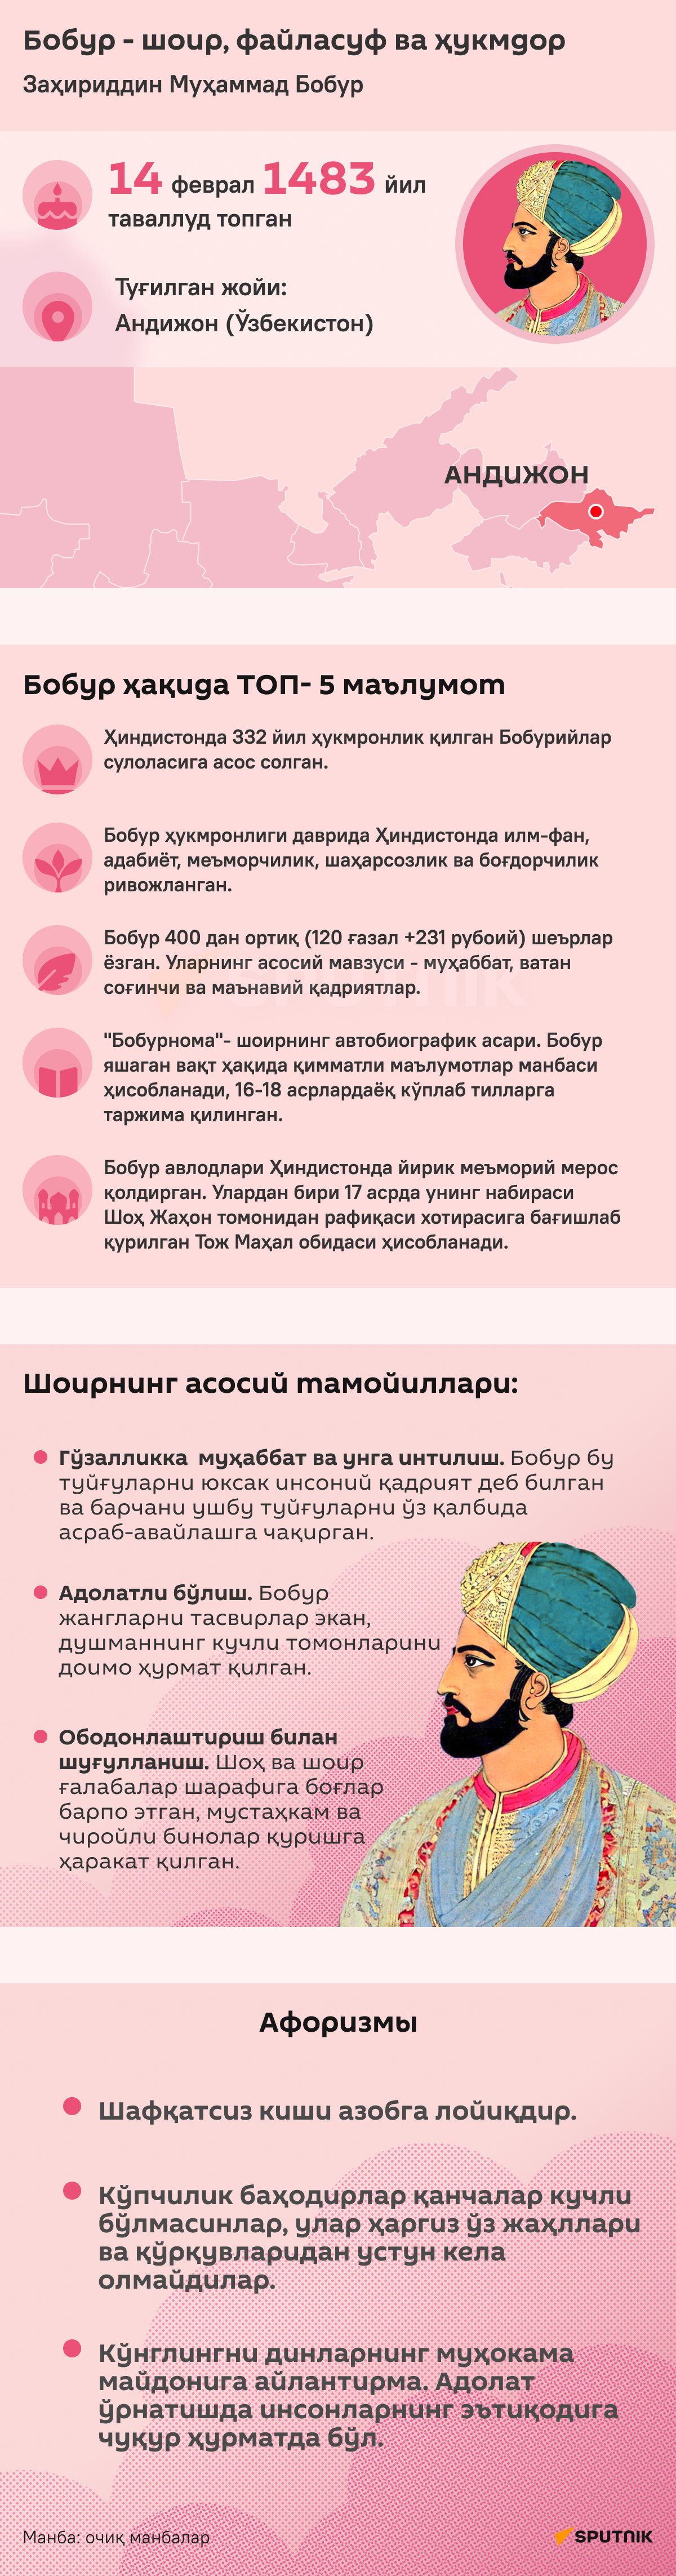 Бабур инфографика узб - Sputnik Ўзбекистон